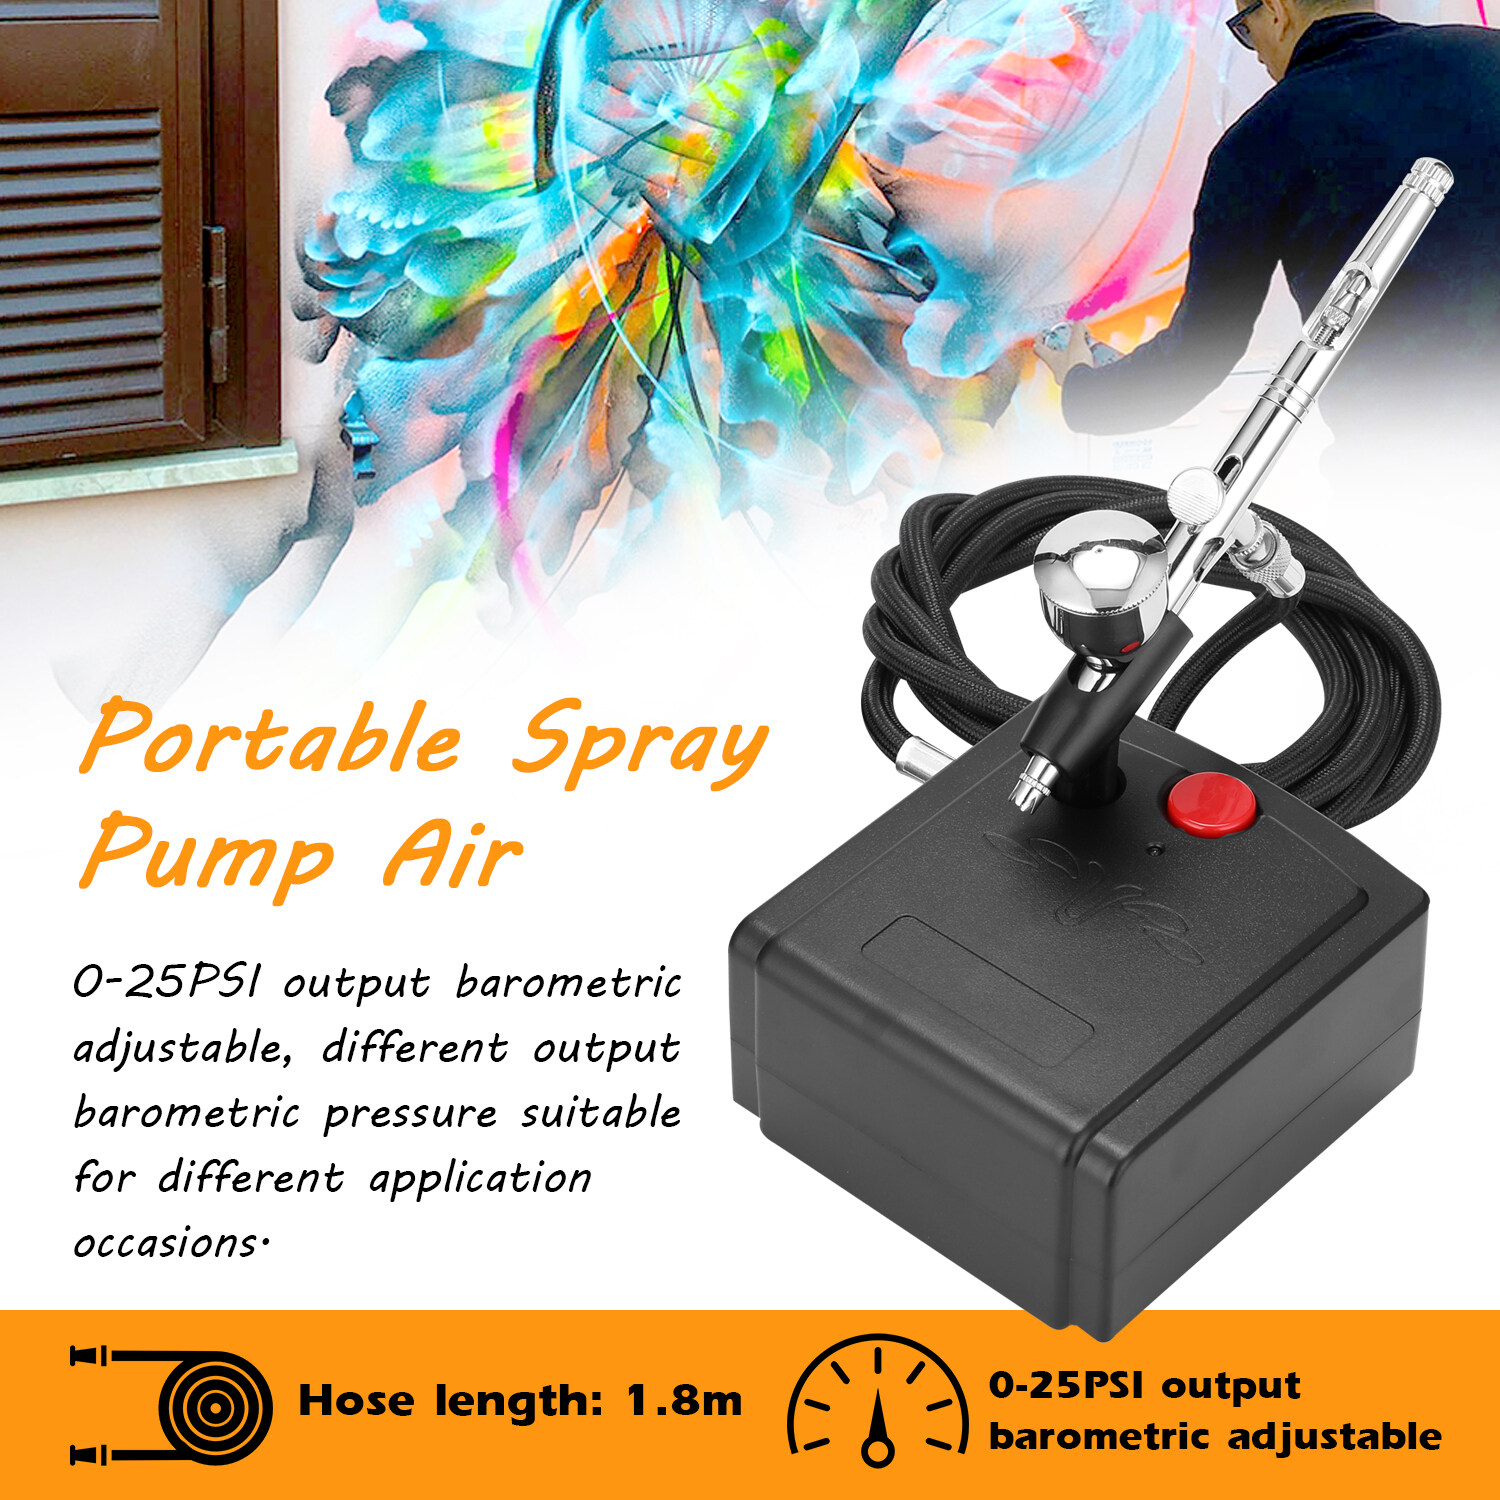 BO YIN Portable Spray Pump Air Compressor for Makeup Art Painting Craft